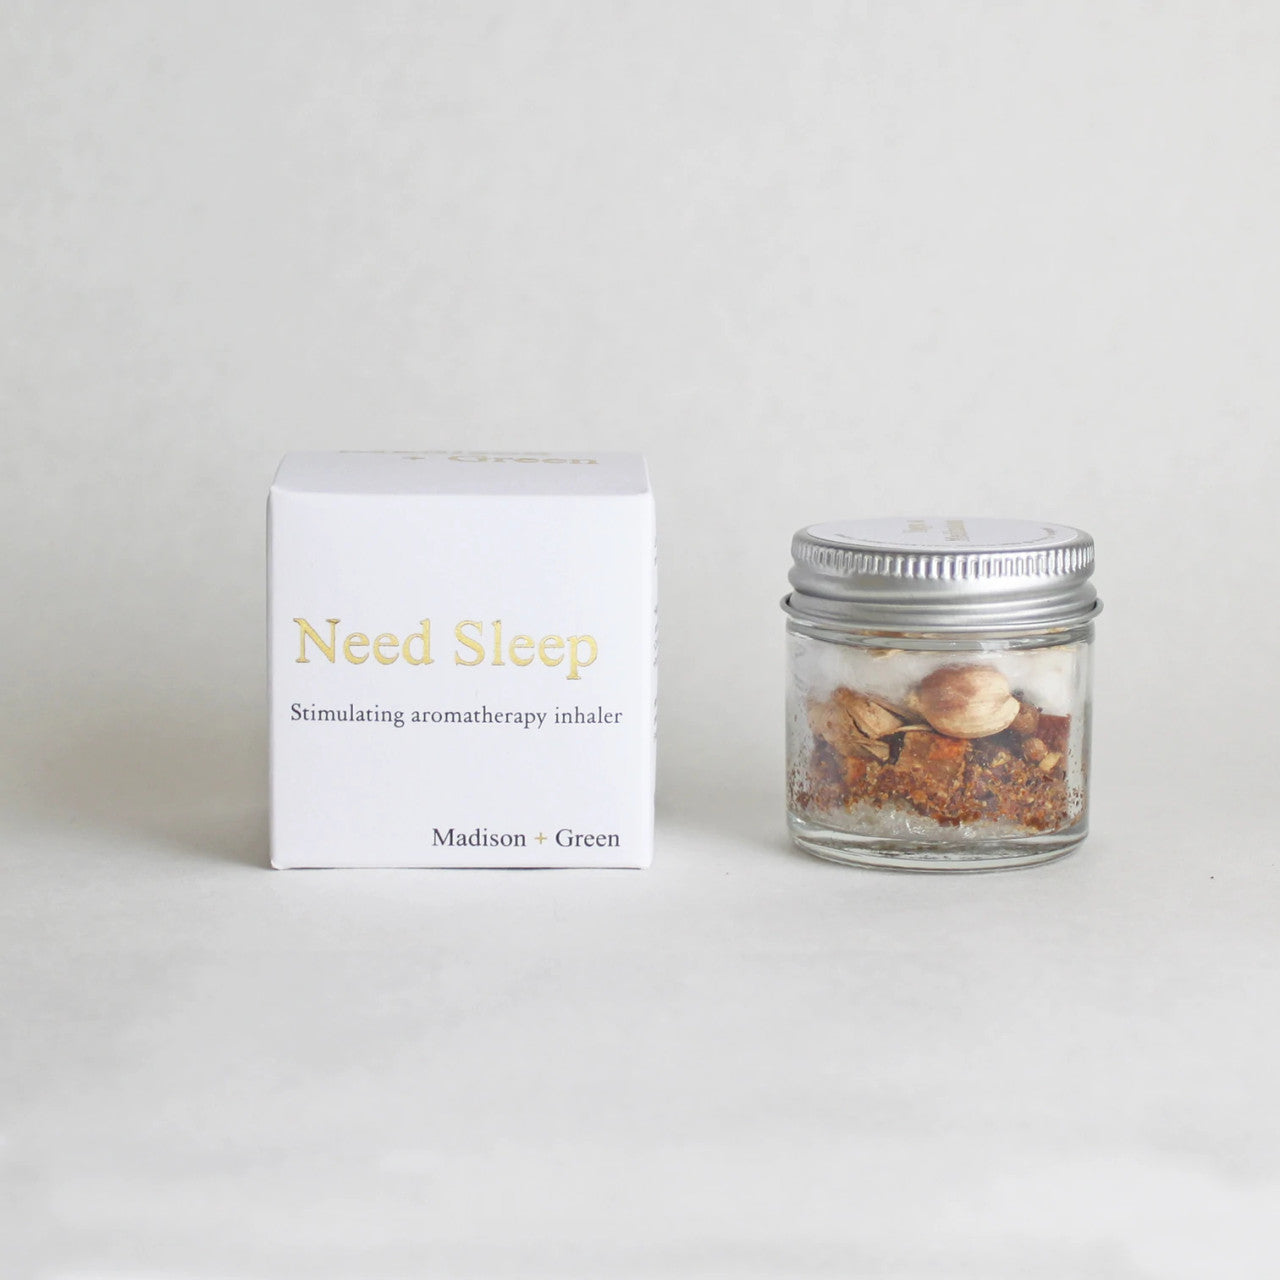 Madison + Green "Need Sleep" - Insomnia Relief Aromatherapy Inhaler